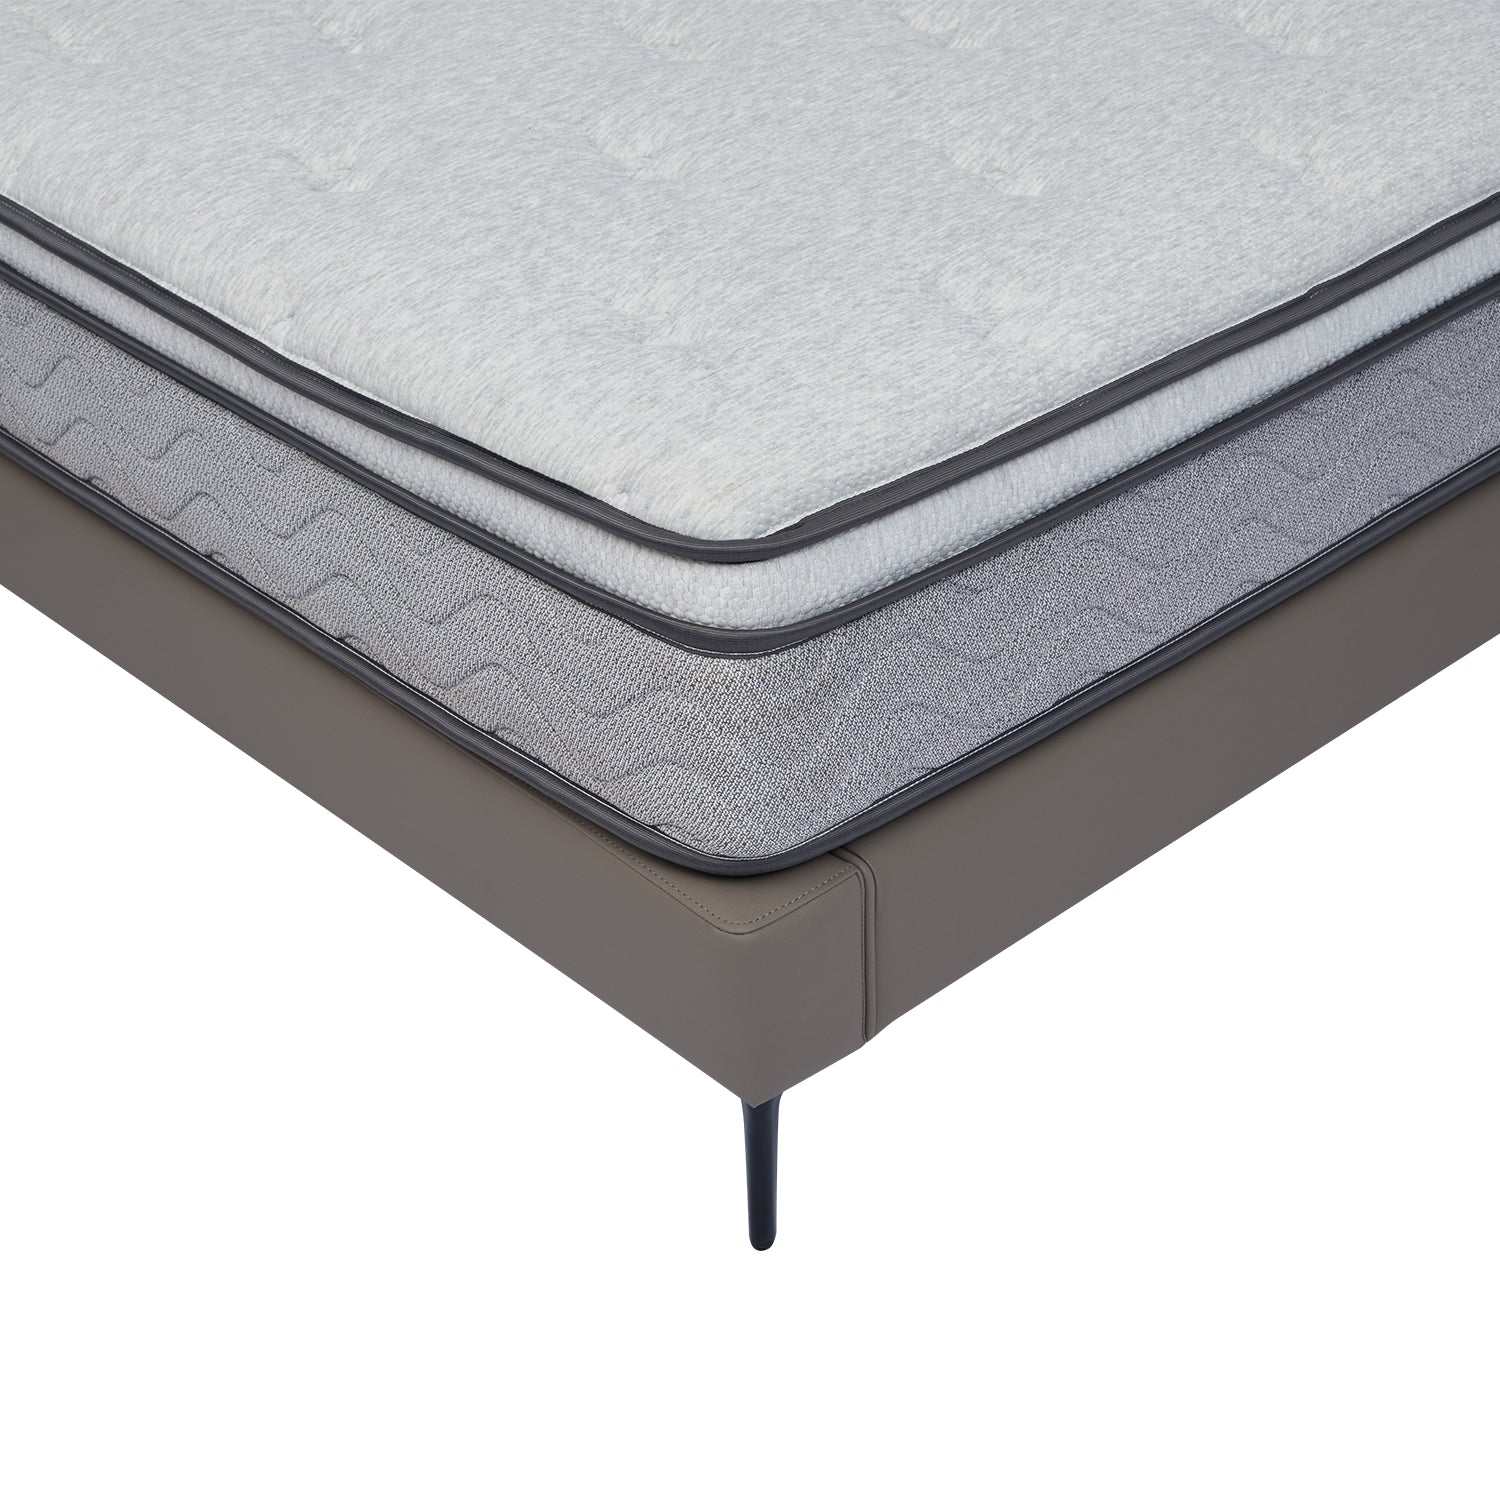 Close-up of DeRUCCI Bed Frame BOC1 - 019 corner, showing modern design, sturdy frame, metal legs, and light gray layered mattress.